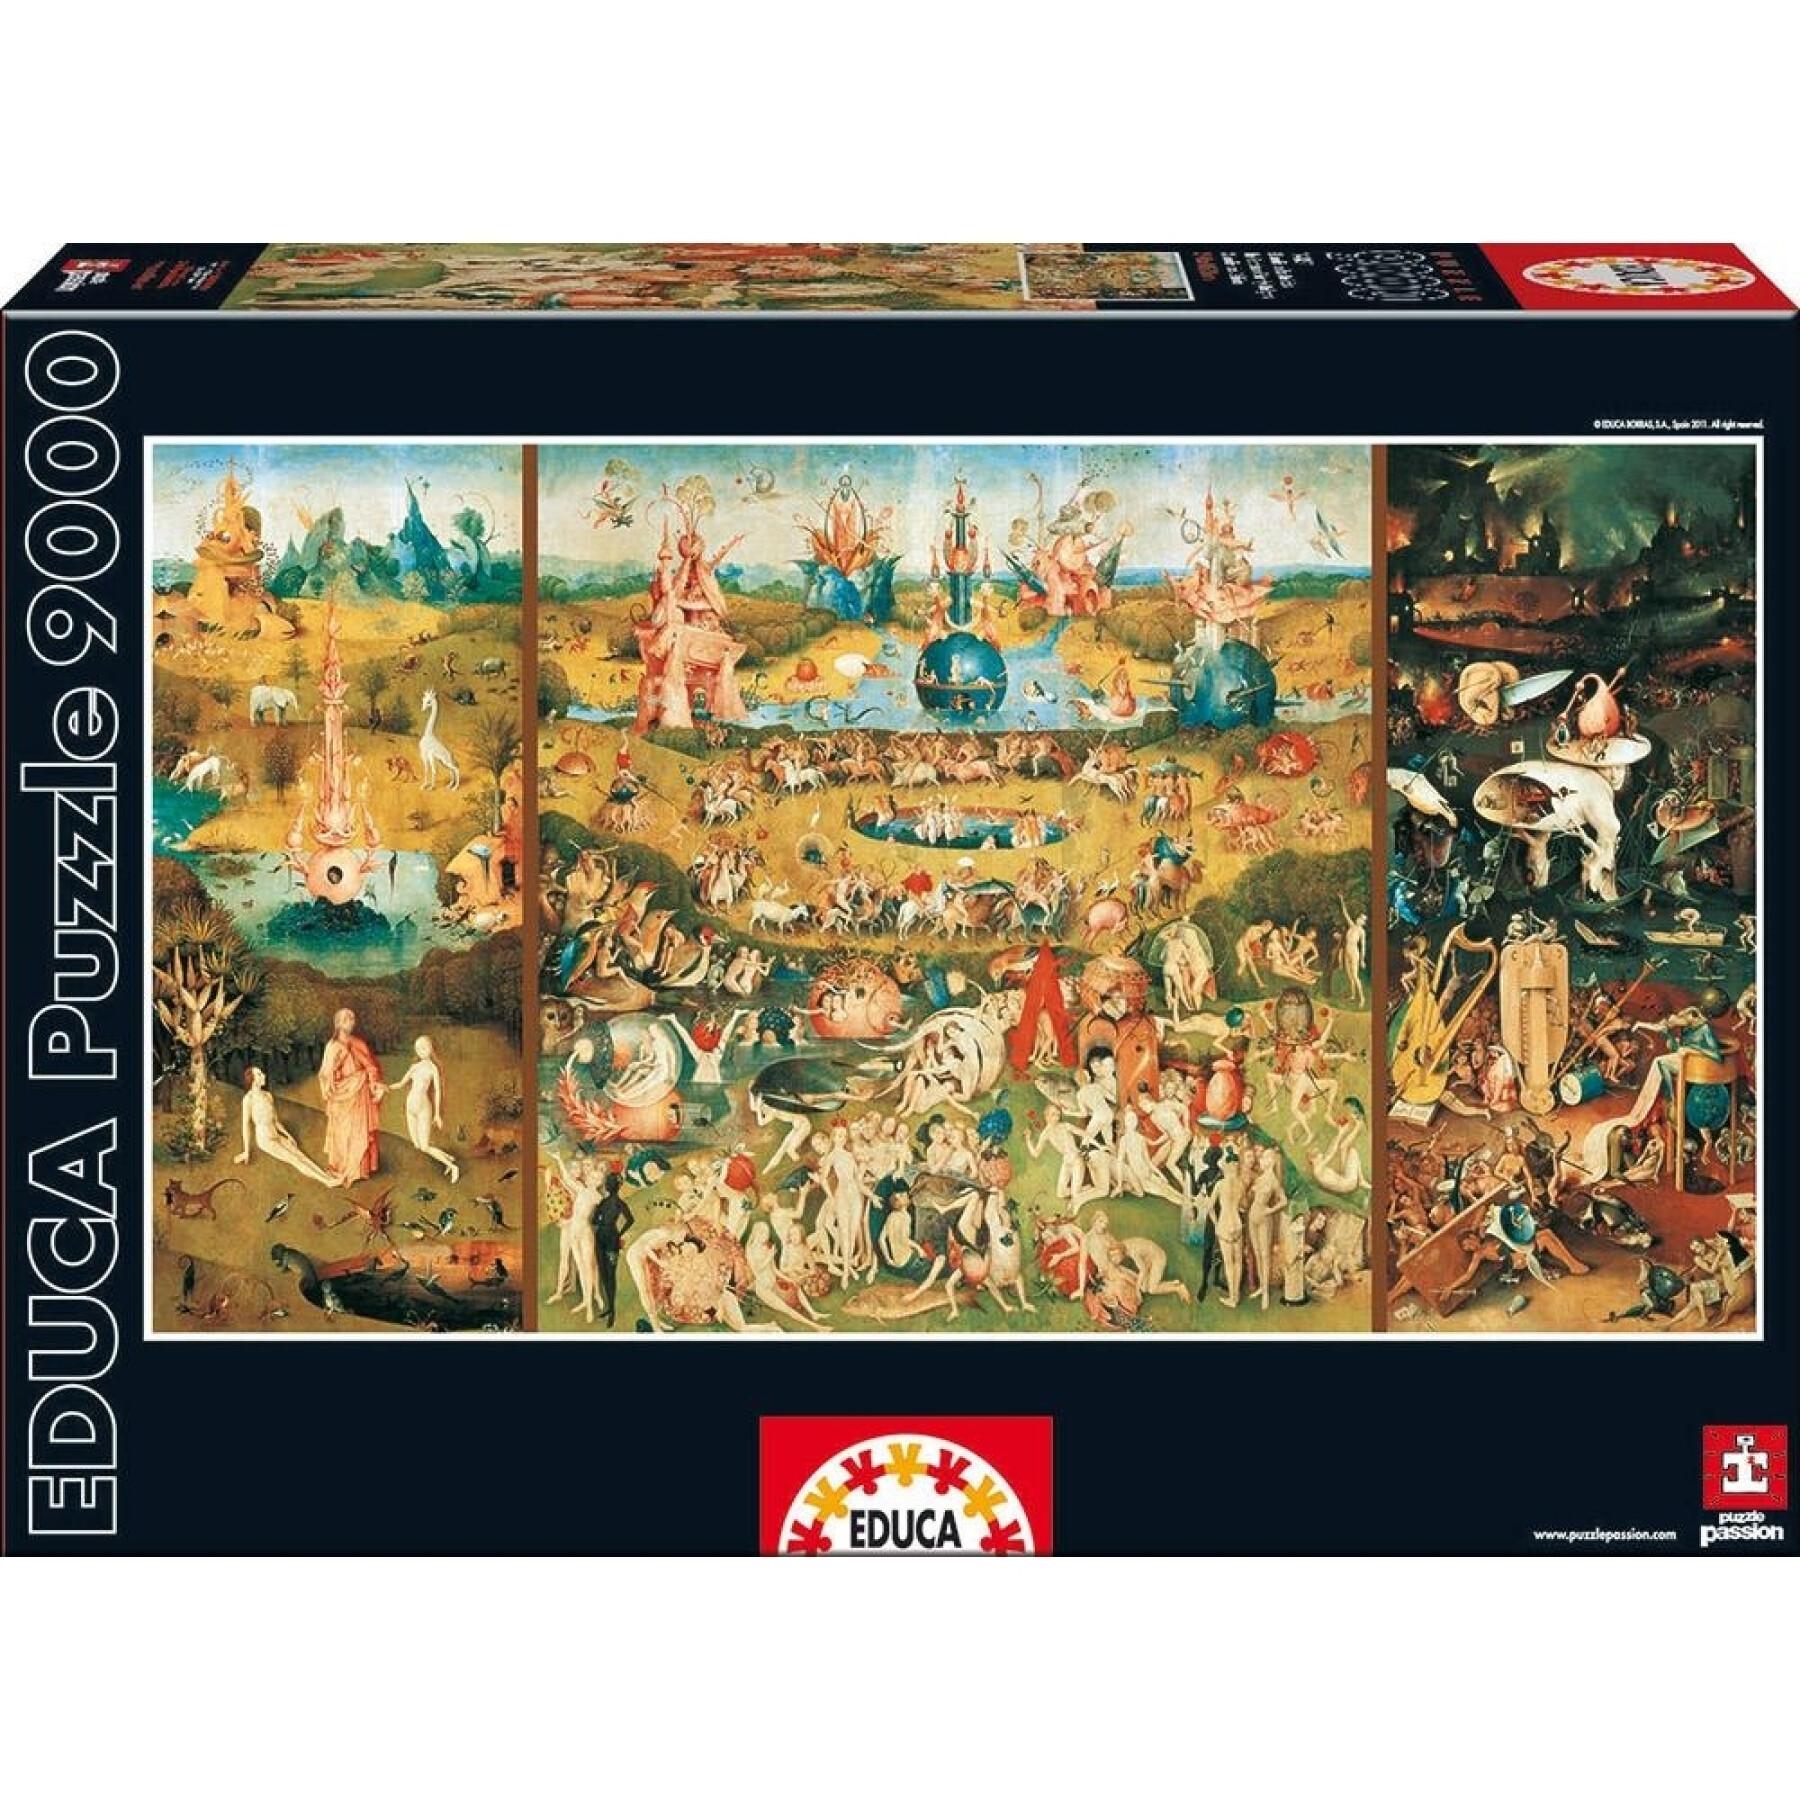 Educa 9,000 Piece Puzzle - The Garden of Earthly Delights